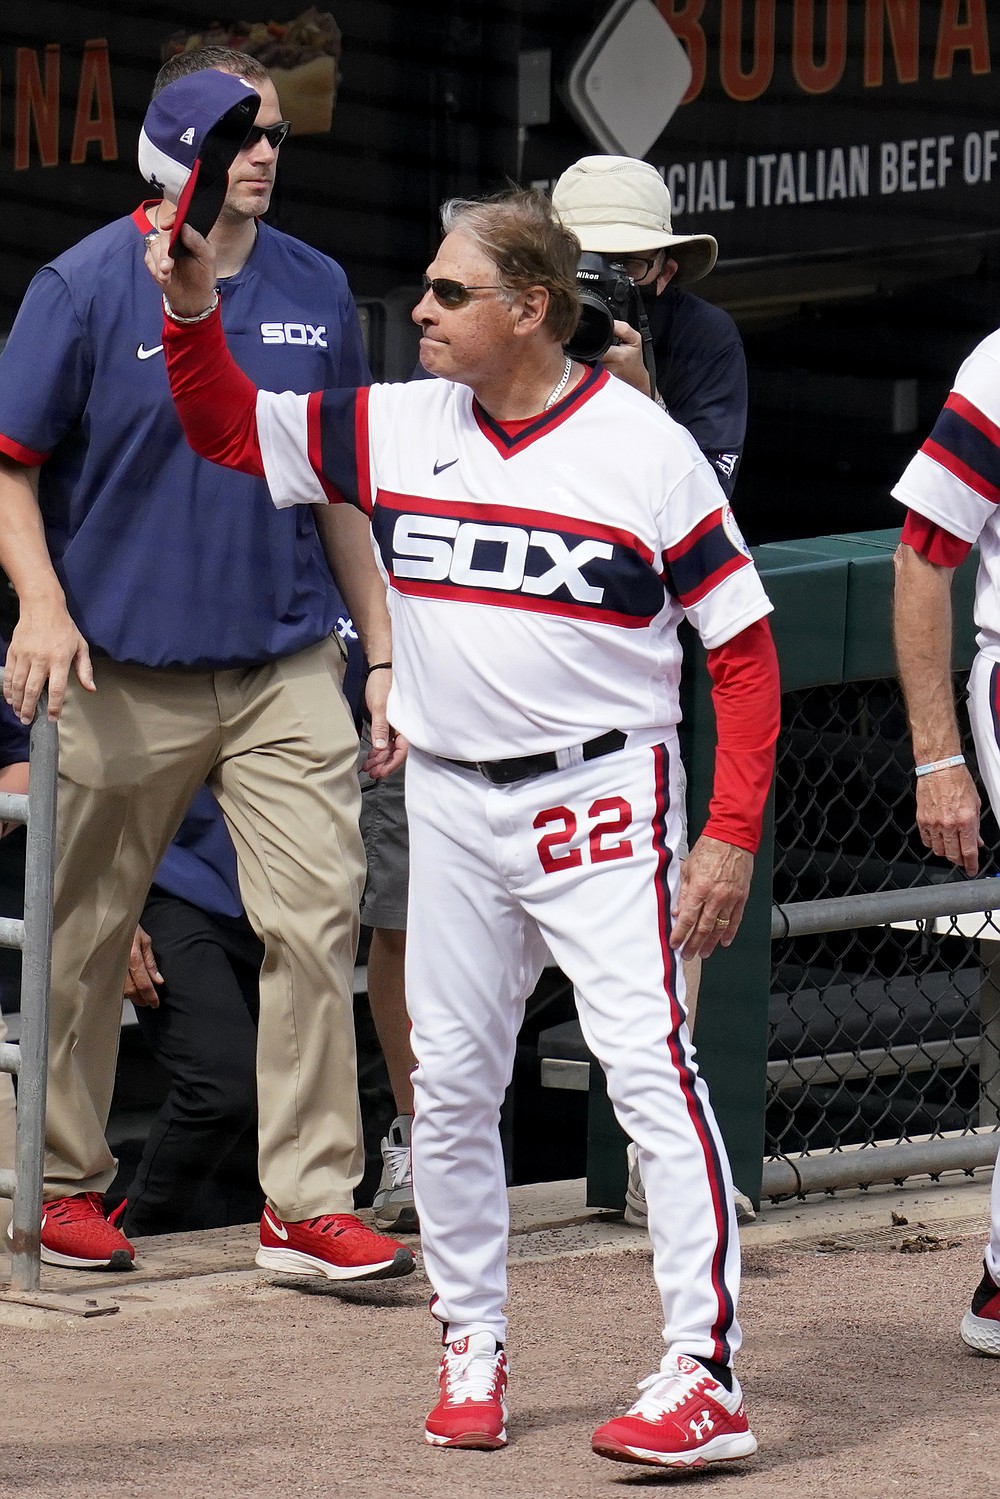 Photos: Chicago White Sox manager Tony La Russa